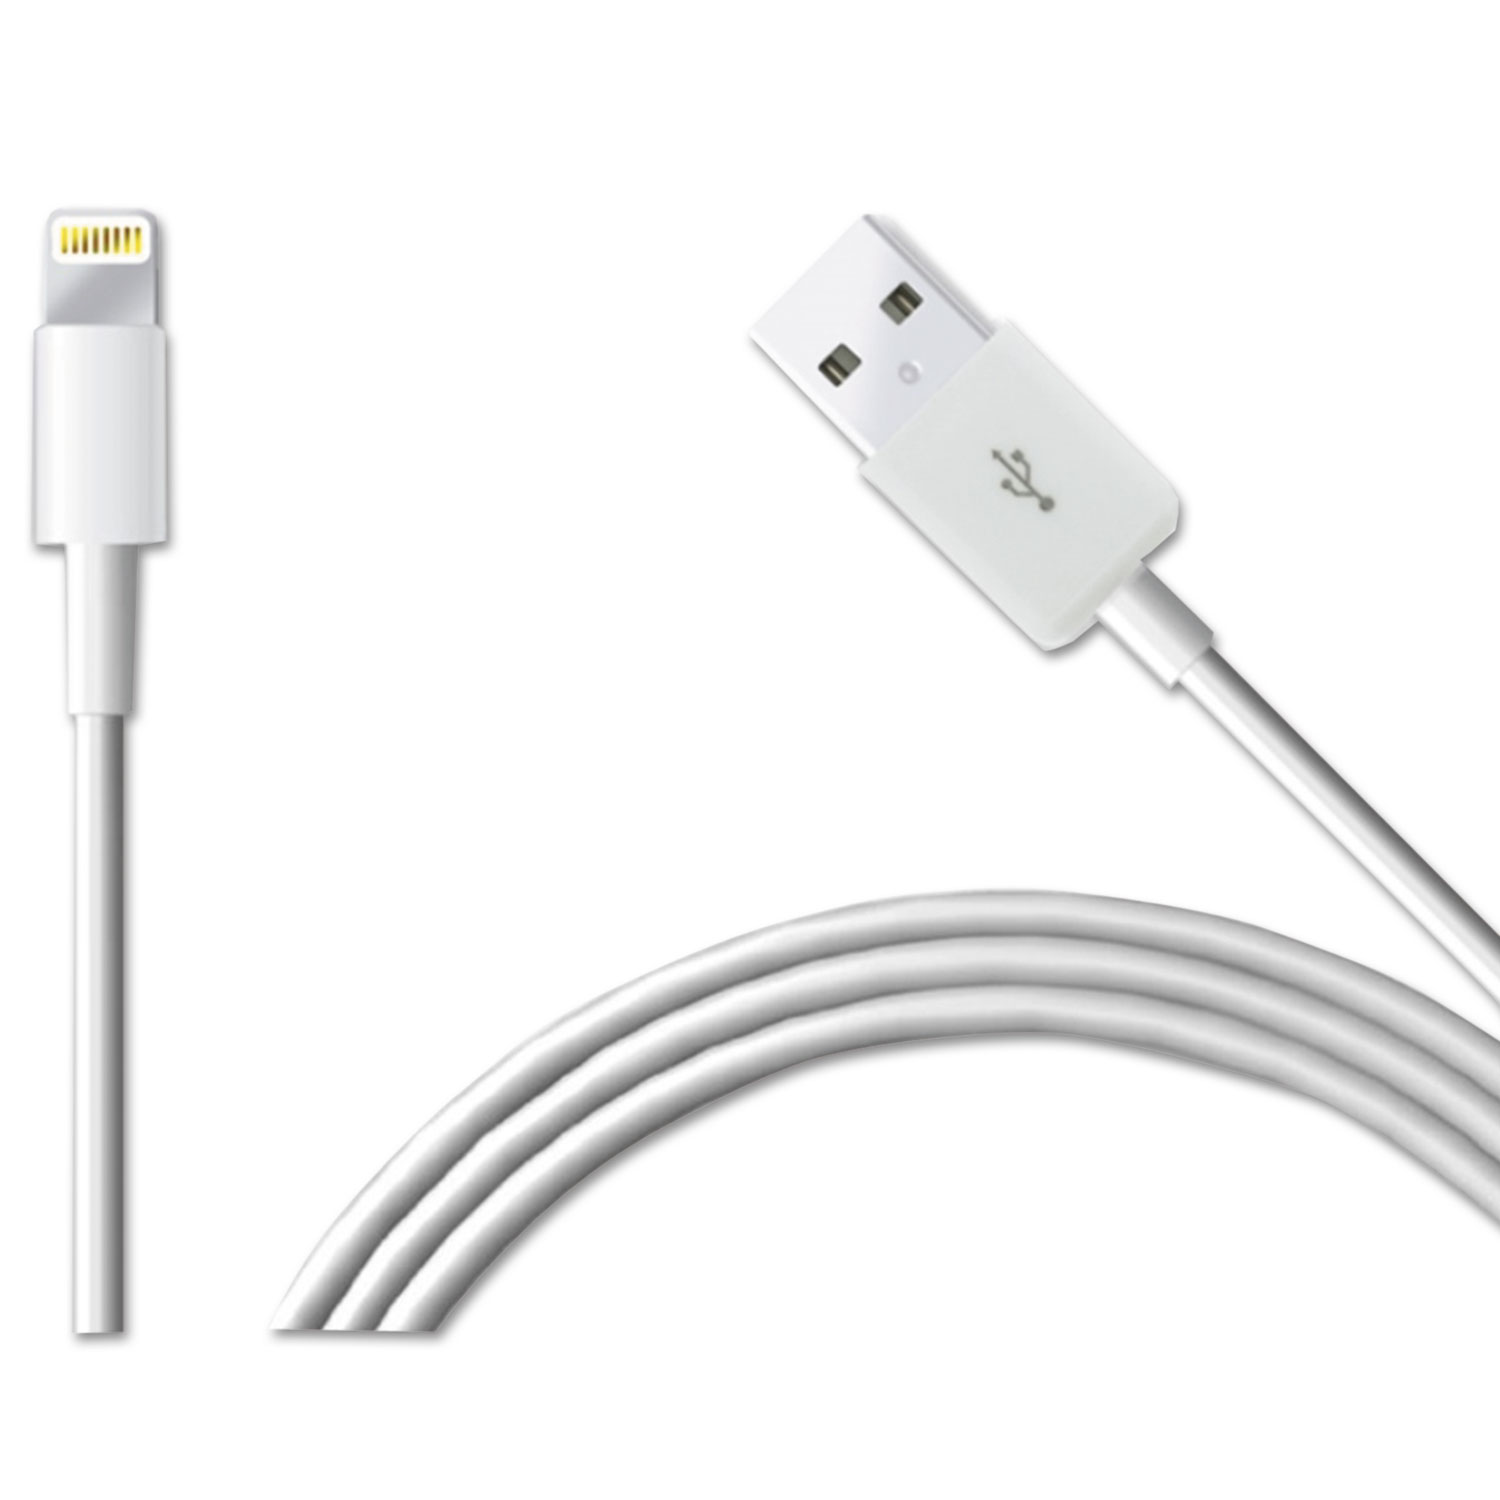 Bytech Apple Lightning Cable, 10 Ft, White - image 2 of 2